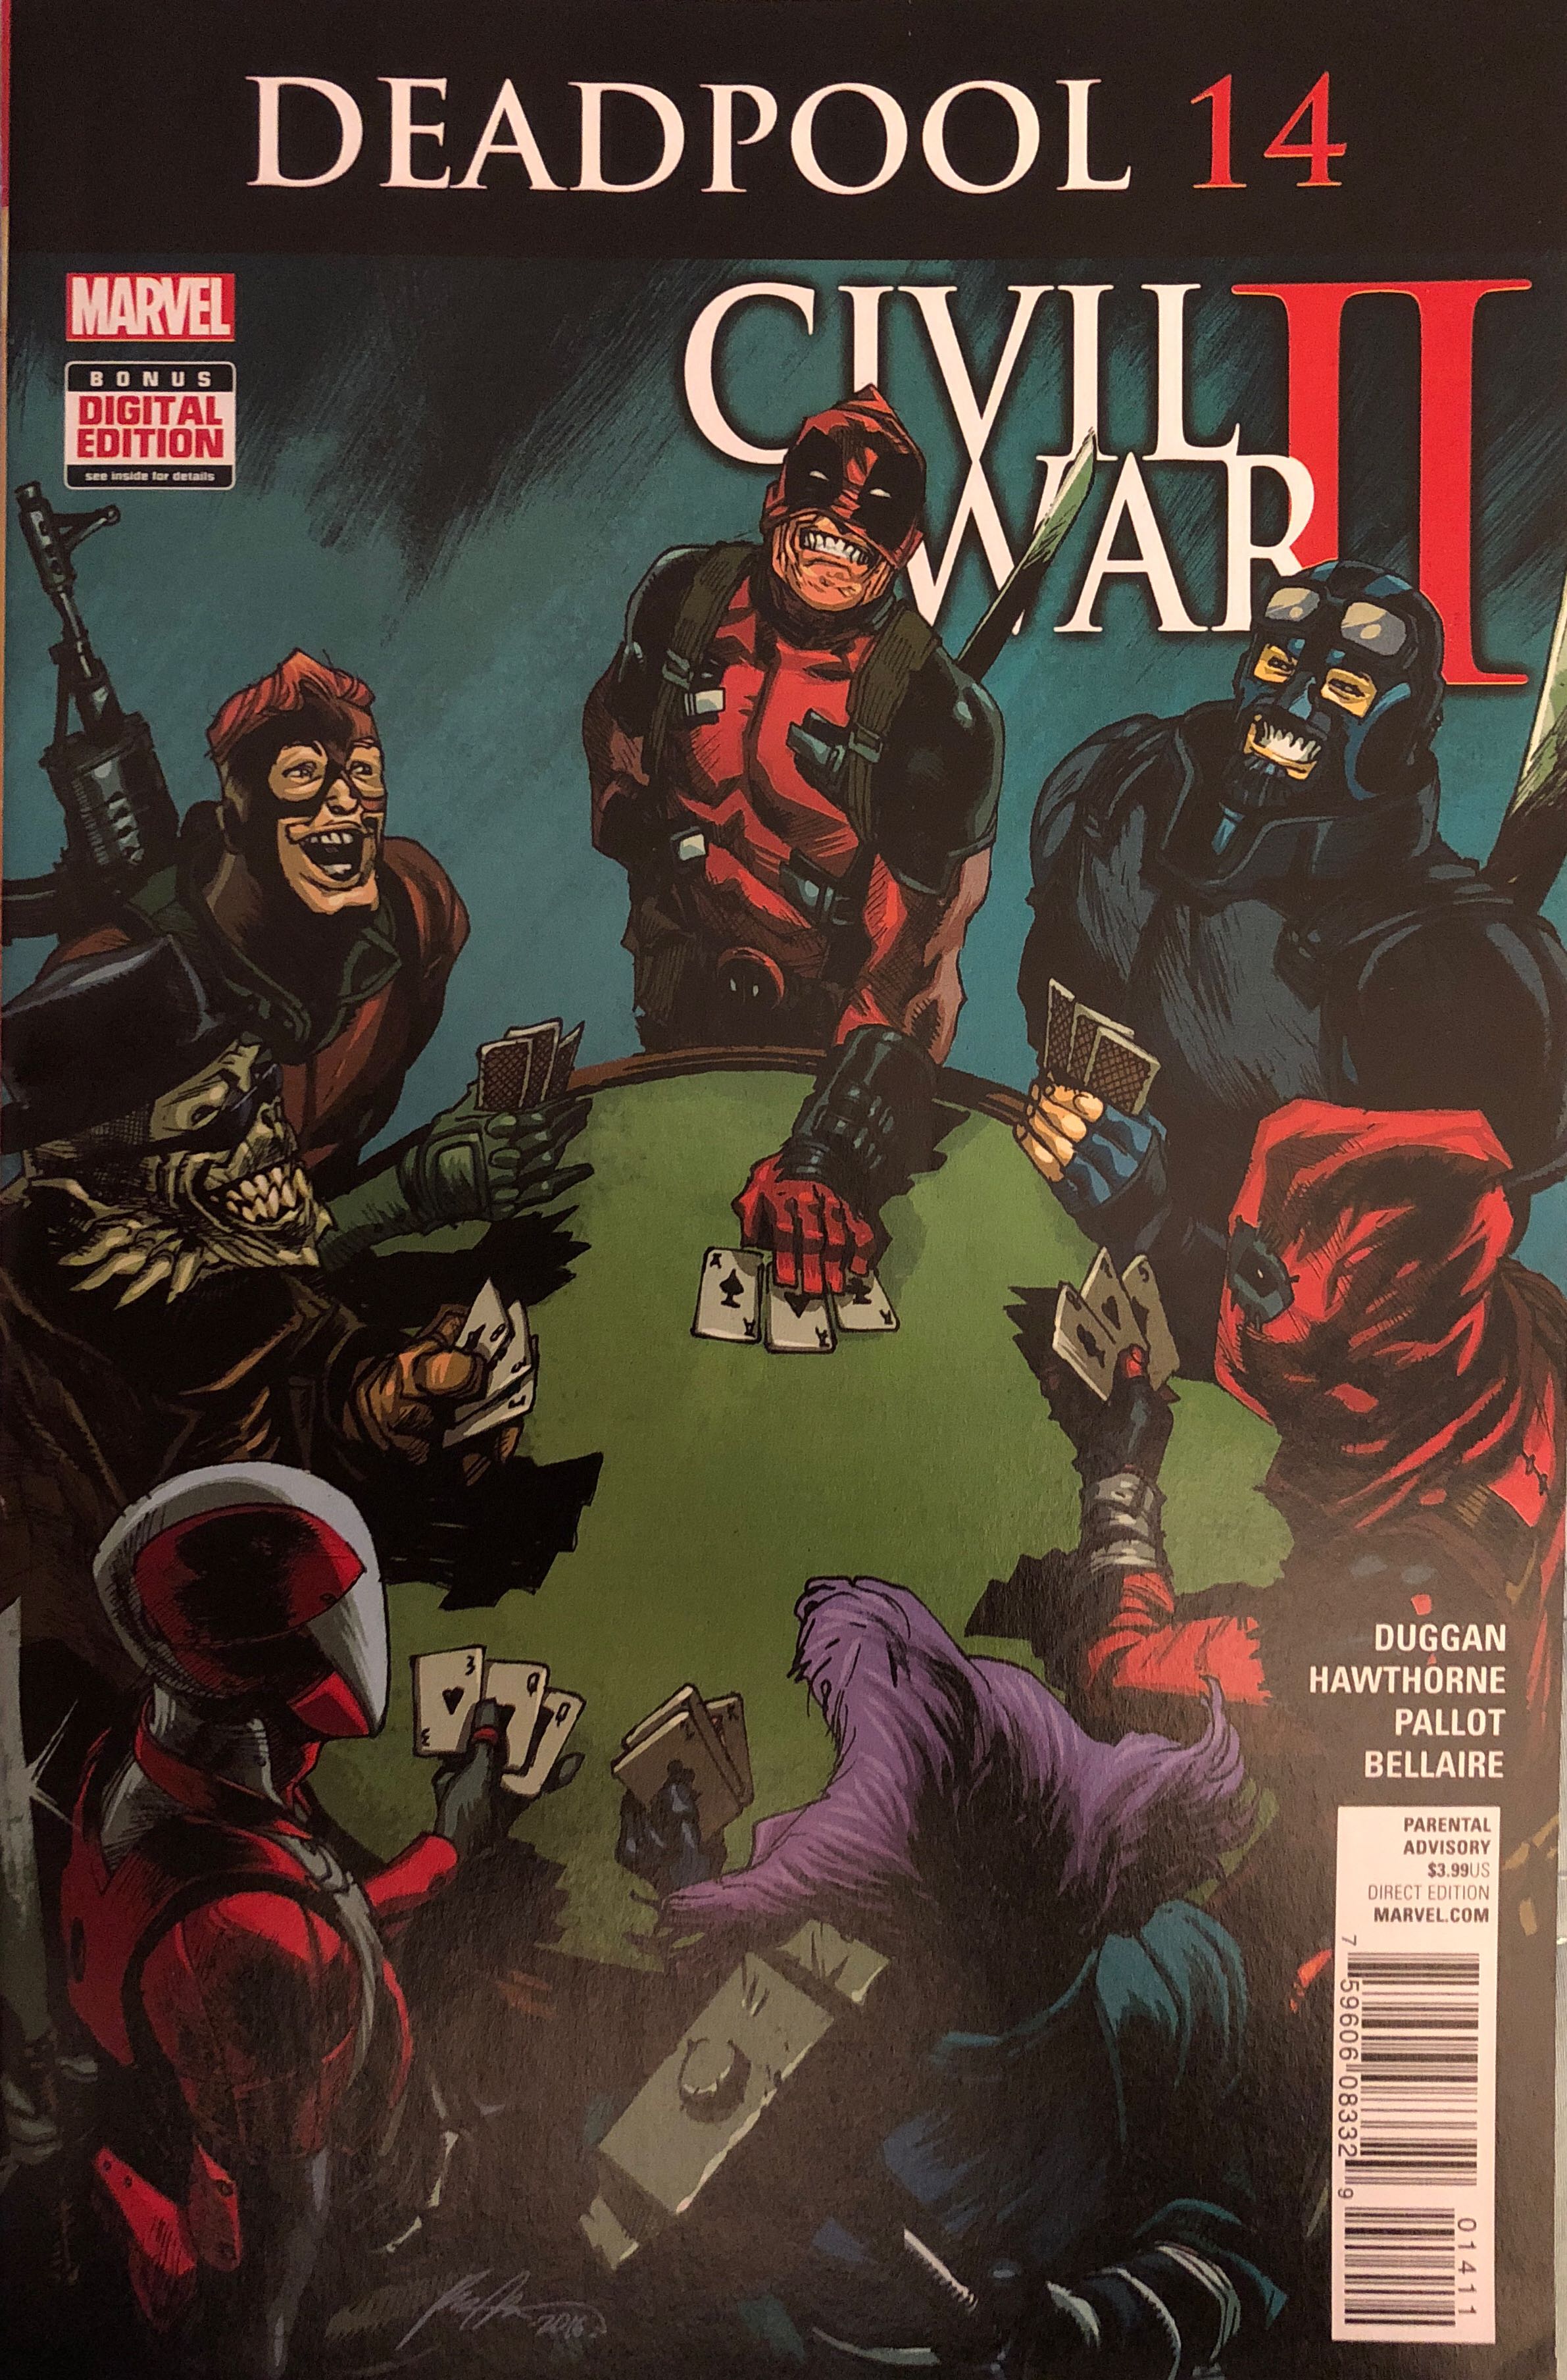 Deadpool - Marvel (14 - Aug 2016) comic book collectible [Barcode 75960608332901411] - Main Image 1